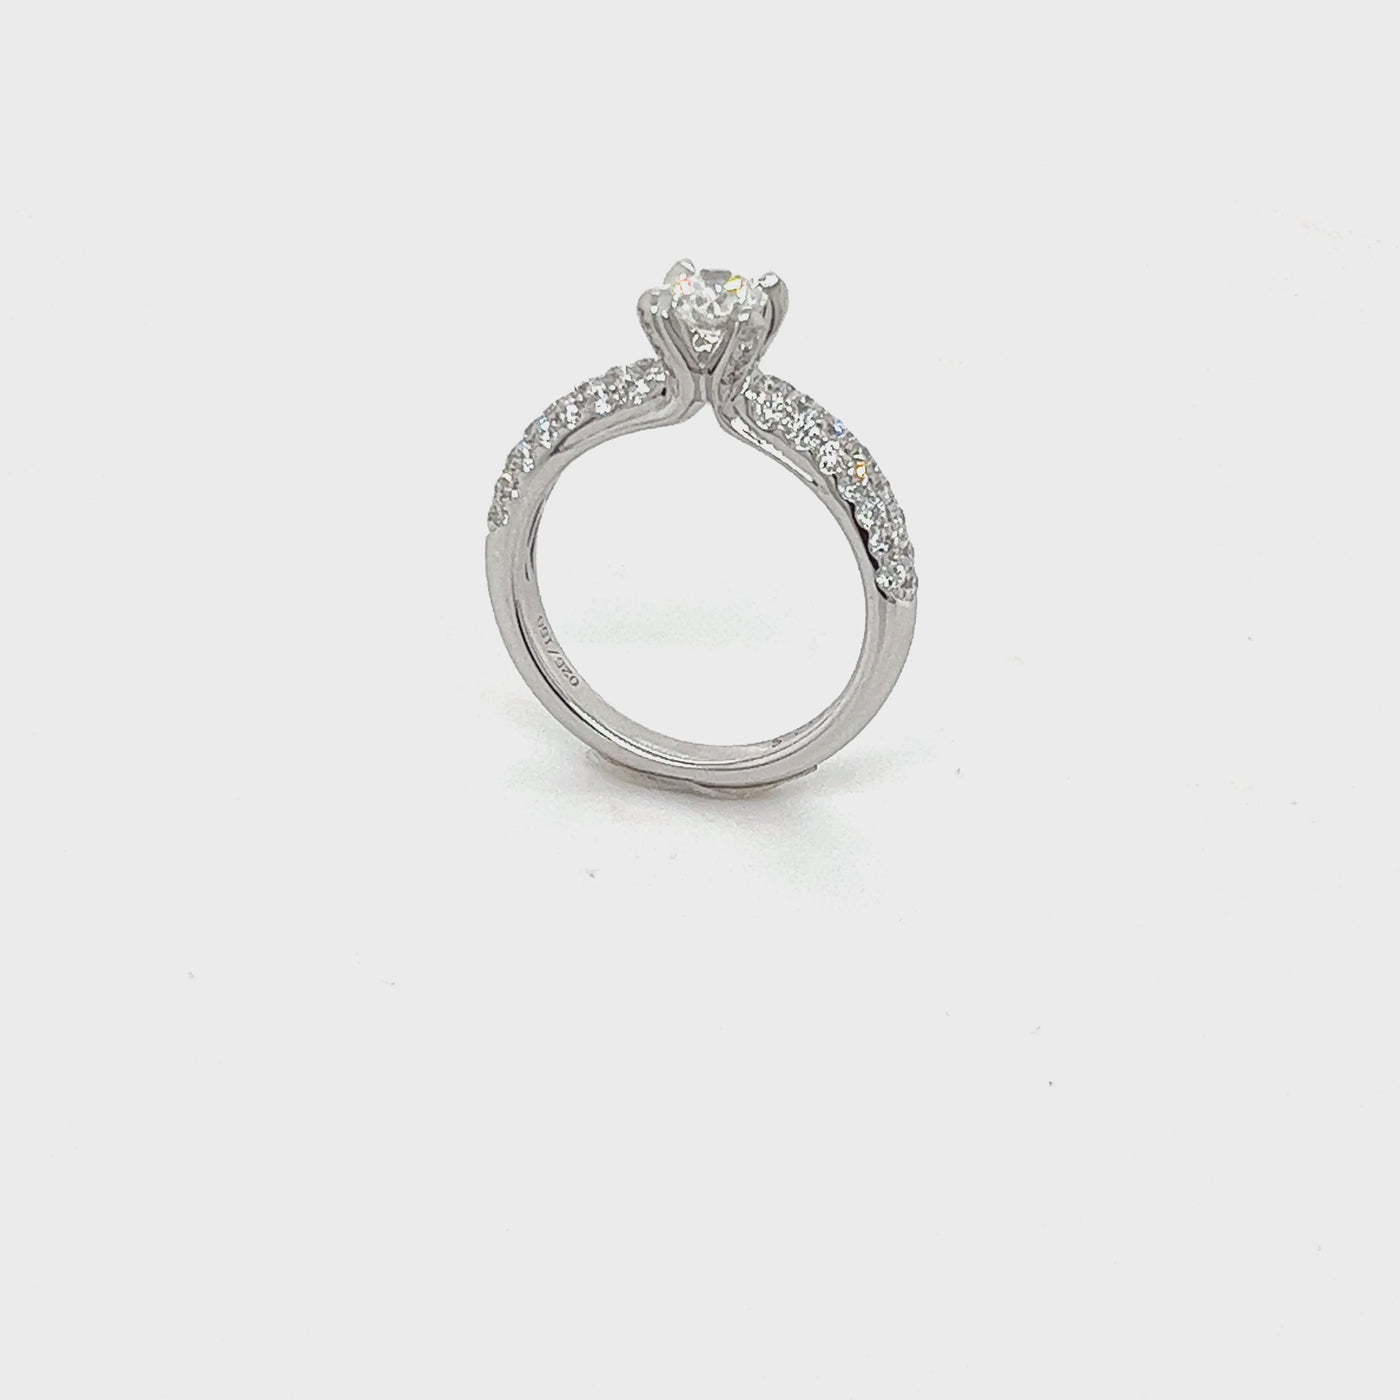 18ct. White Gold Diamond Engagement Ring - 1.25 Carats.